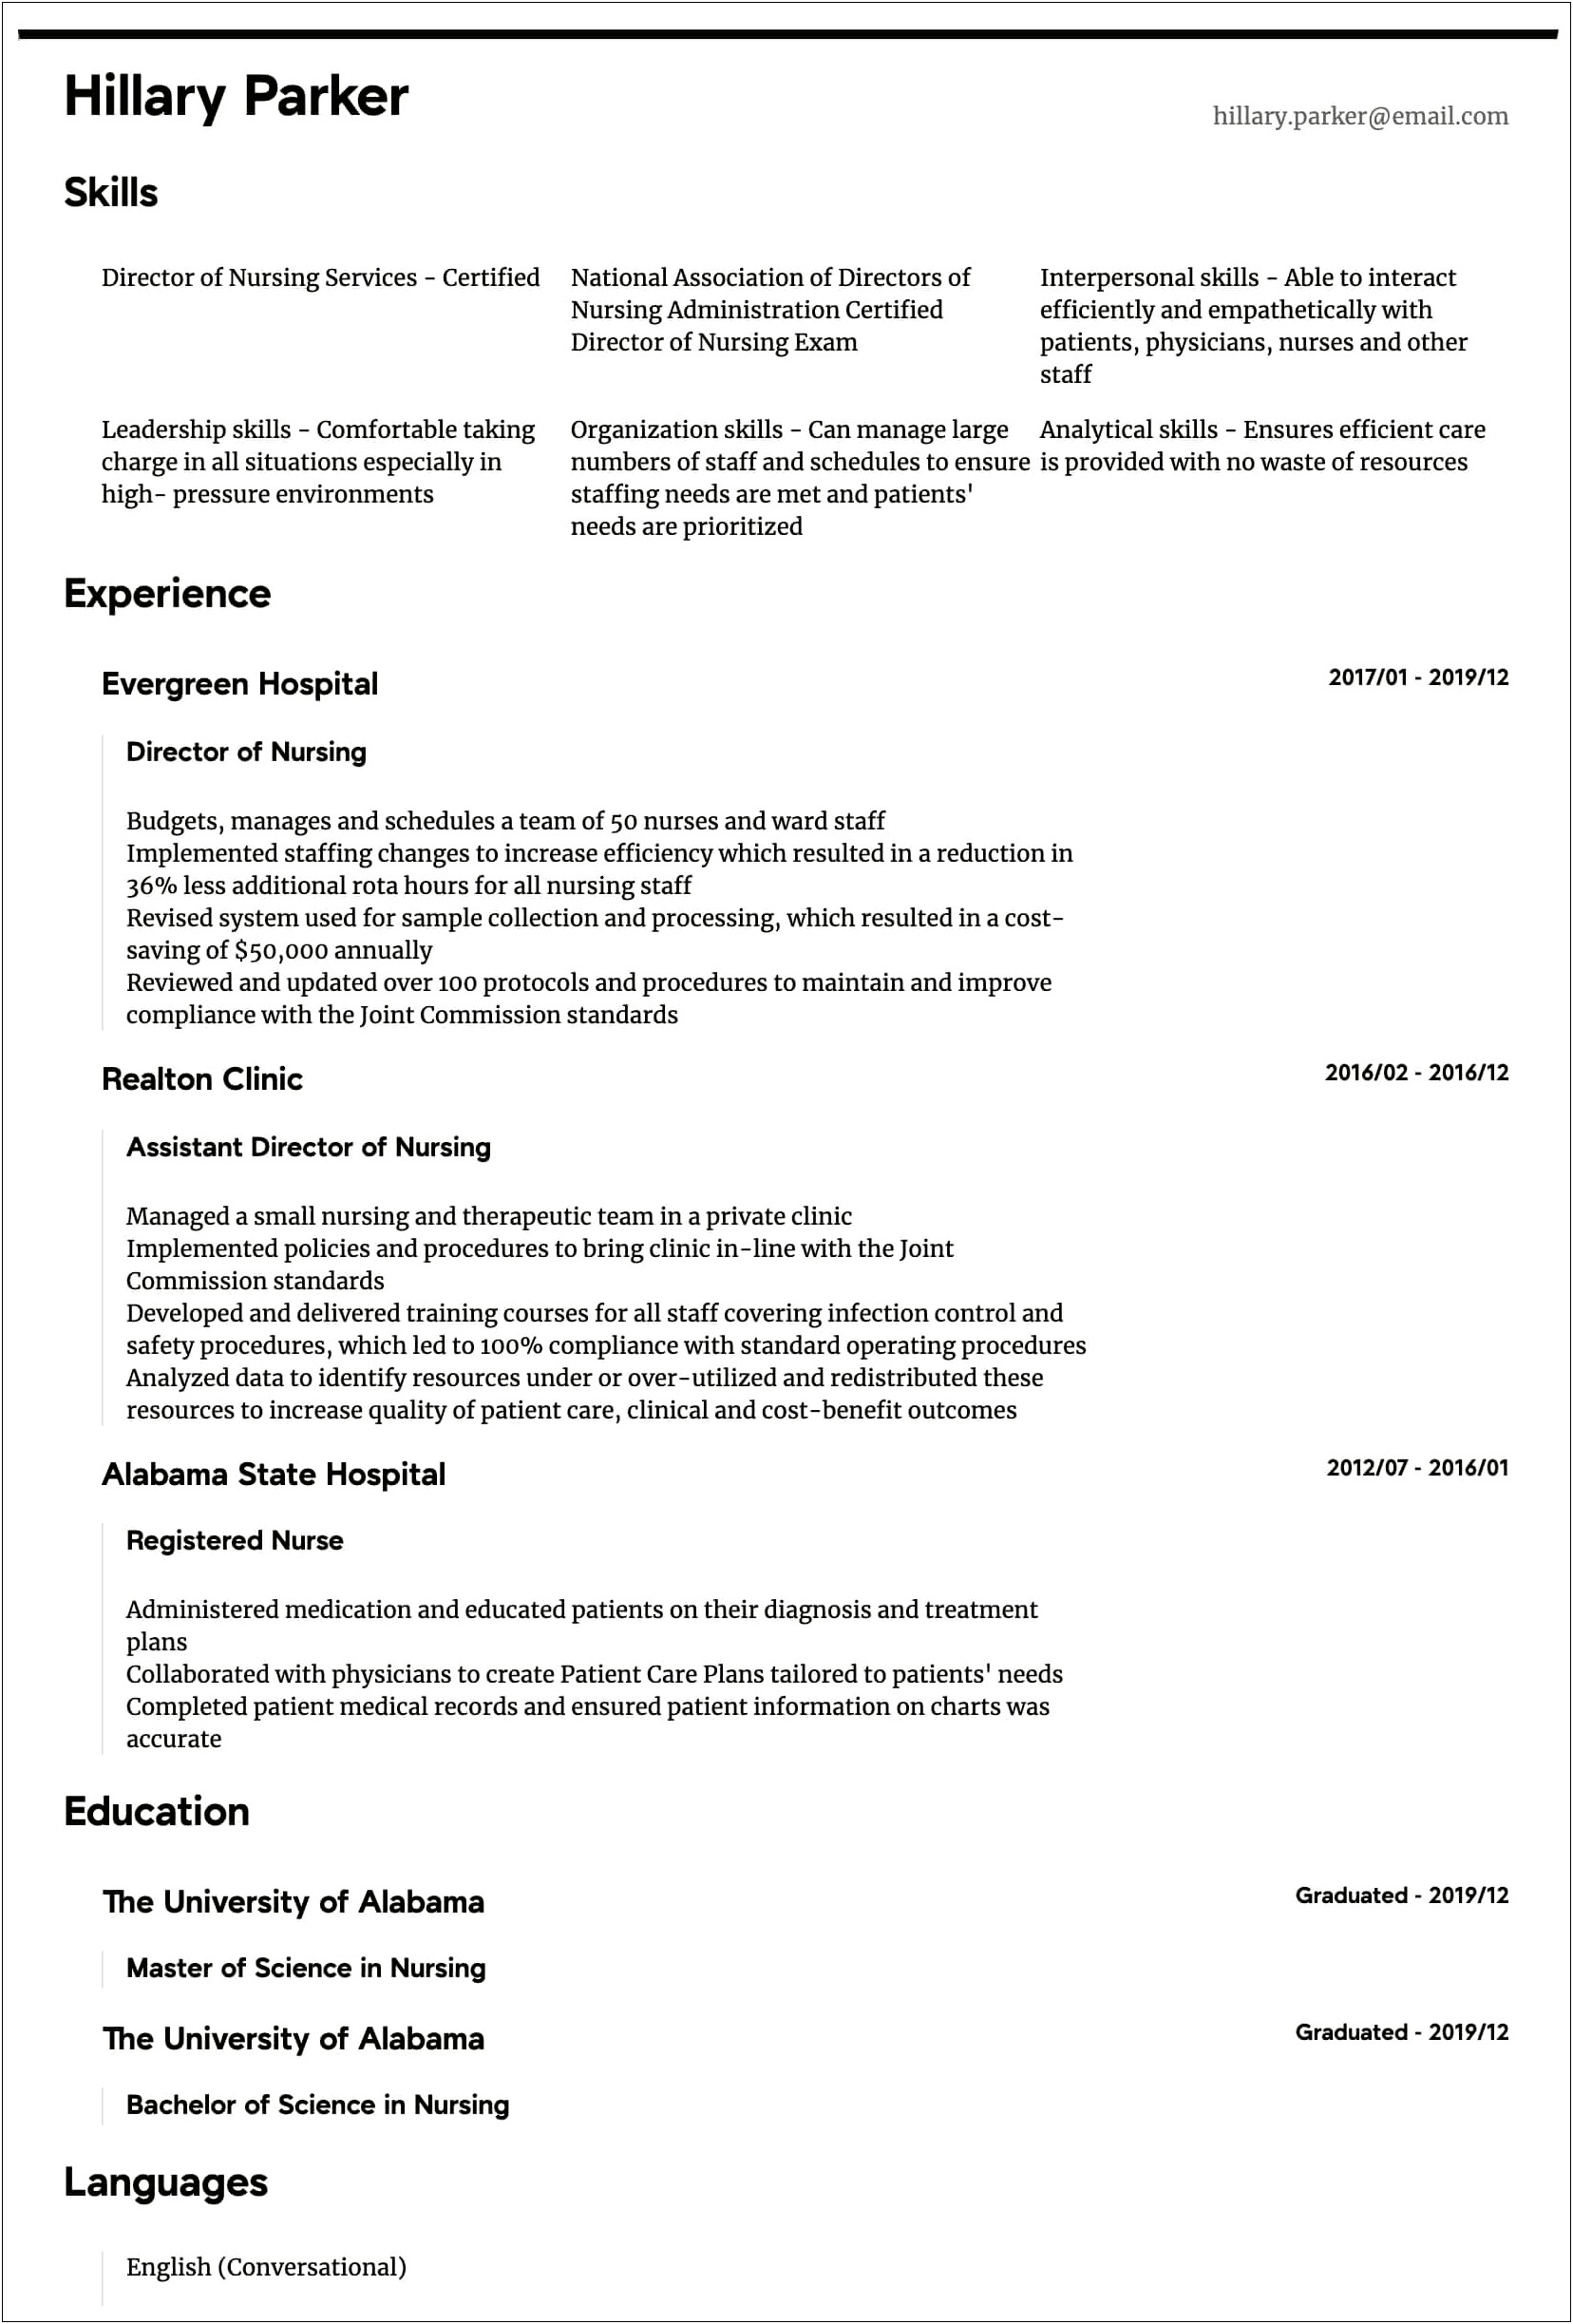 Nursing Qualifications And Skills Resume